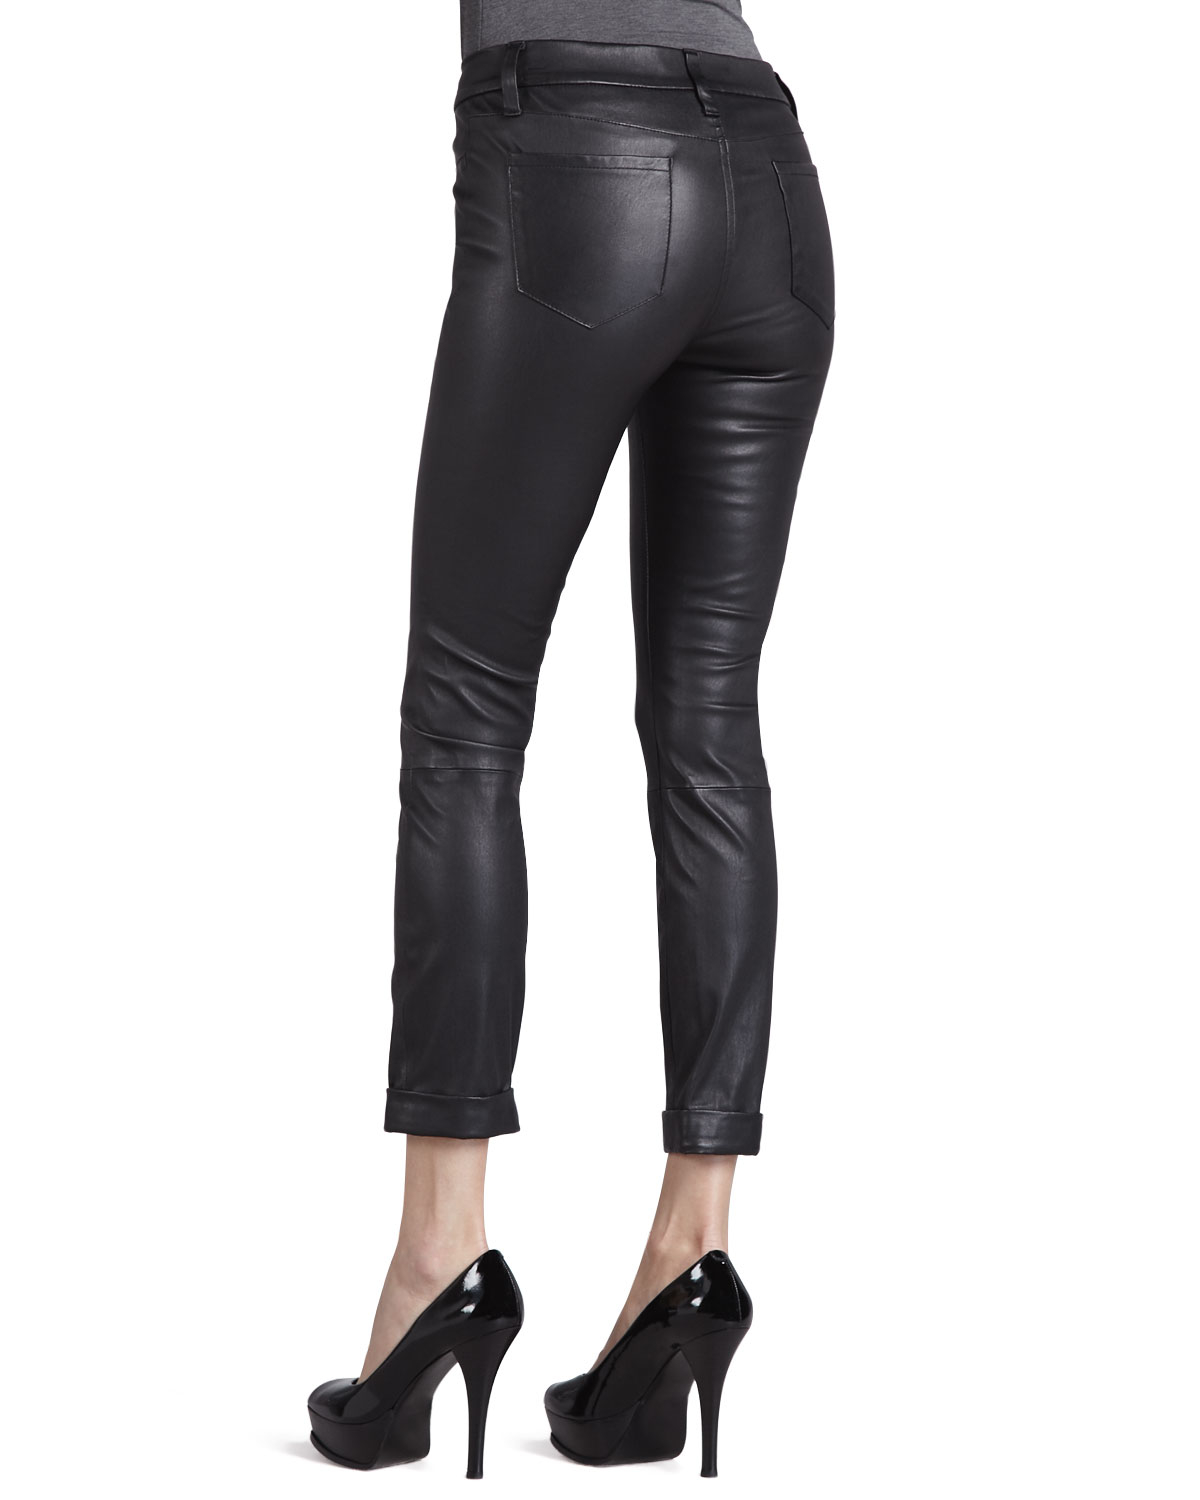 Lyst - J Brand Anja Cuffed Leather Skinny Pants in Black